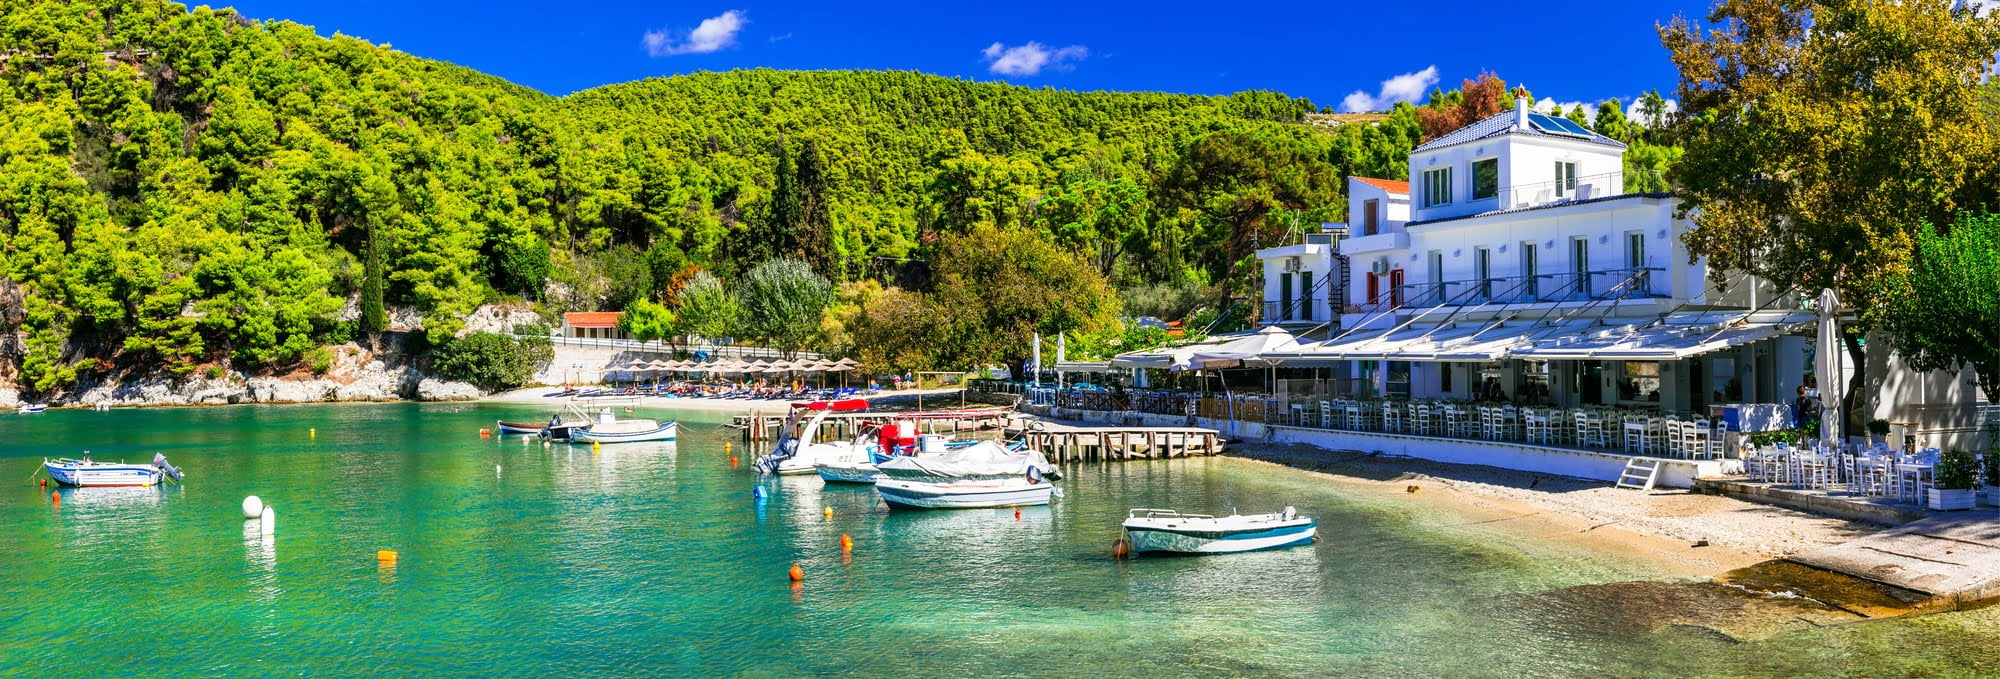 Best of Skopelos island - Picturesque fishing village Agnontas